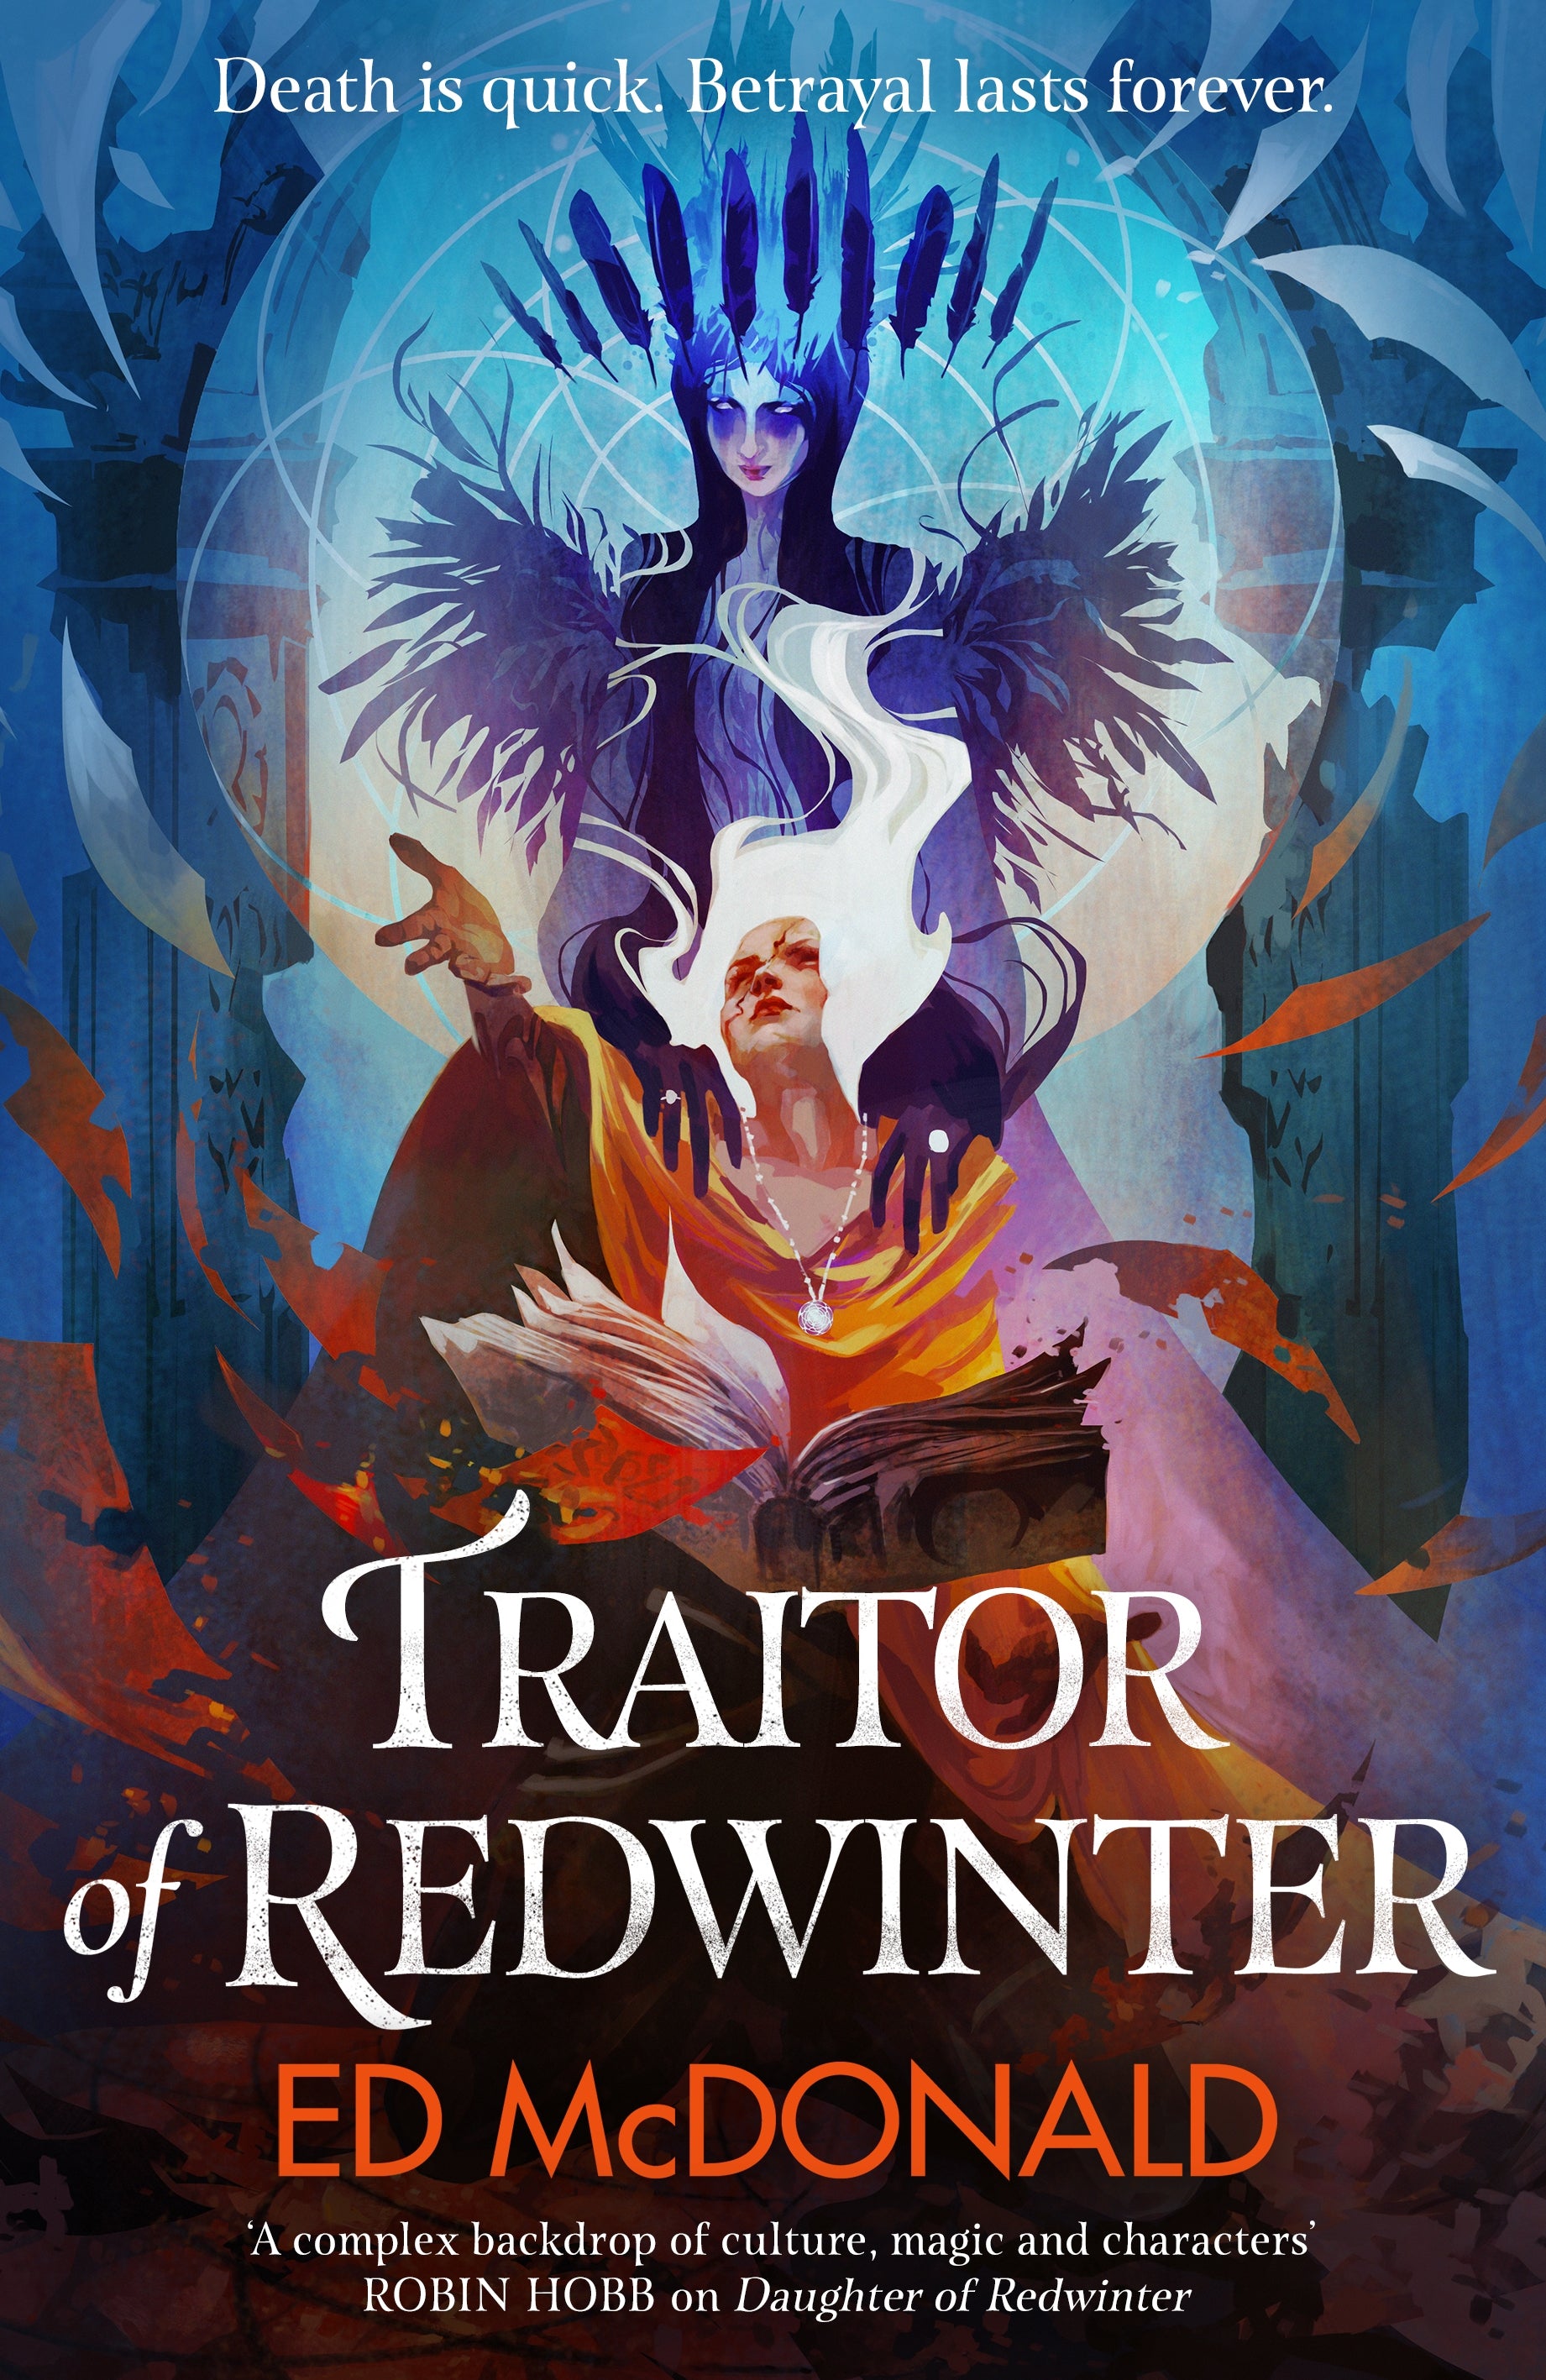 Traitor of Redwinter by Ed McDonald